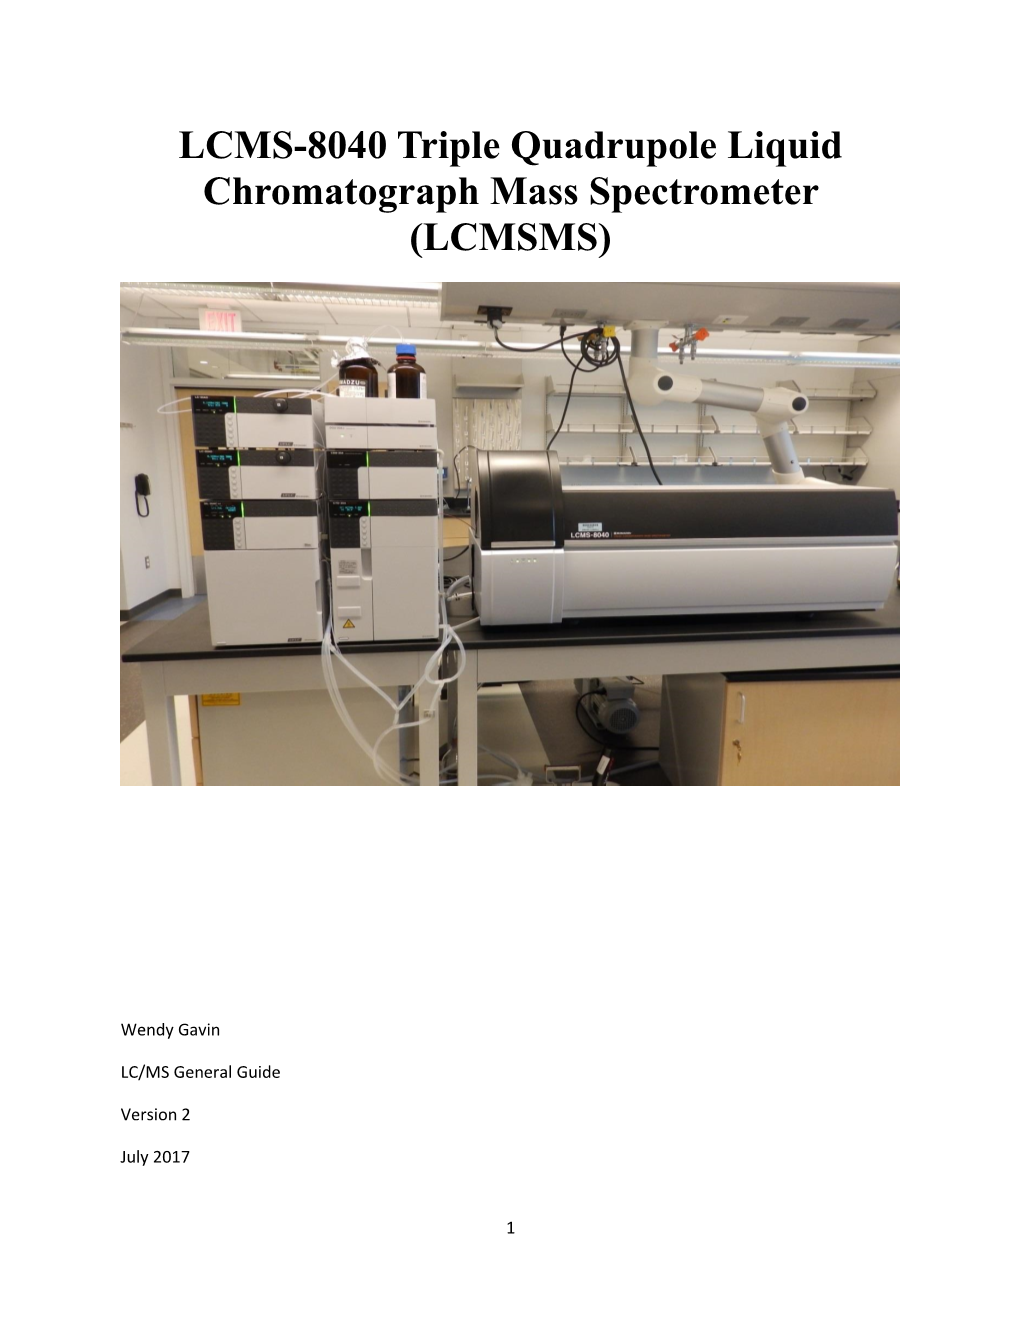 LCMS-8040 Triple Quadrupole Liquid Chromatograph Mass Spectrometer (LCMSMS)